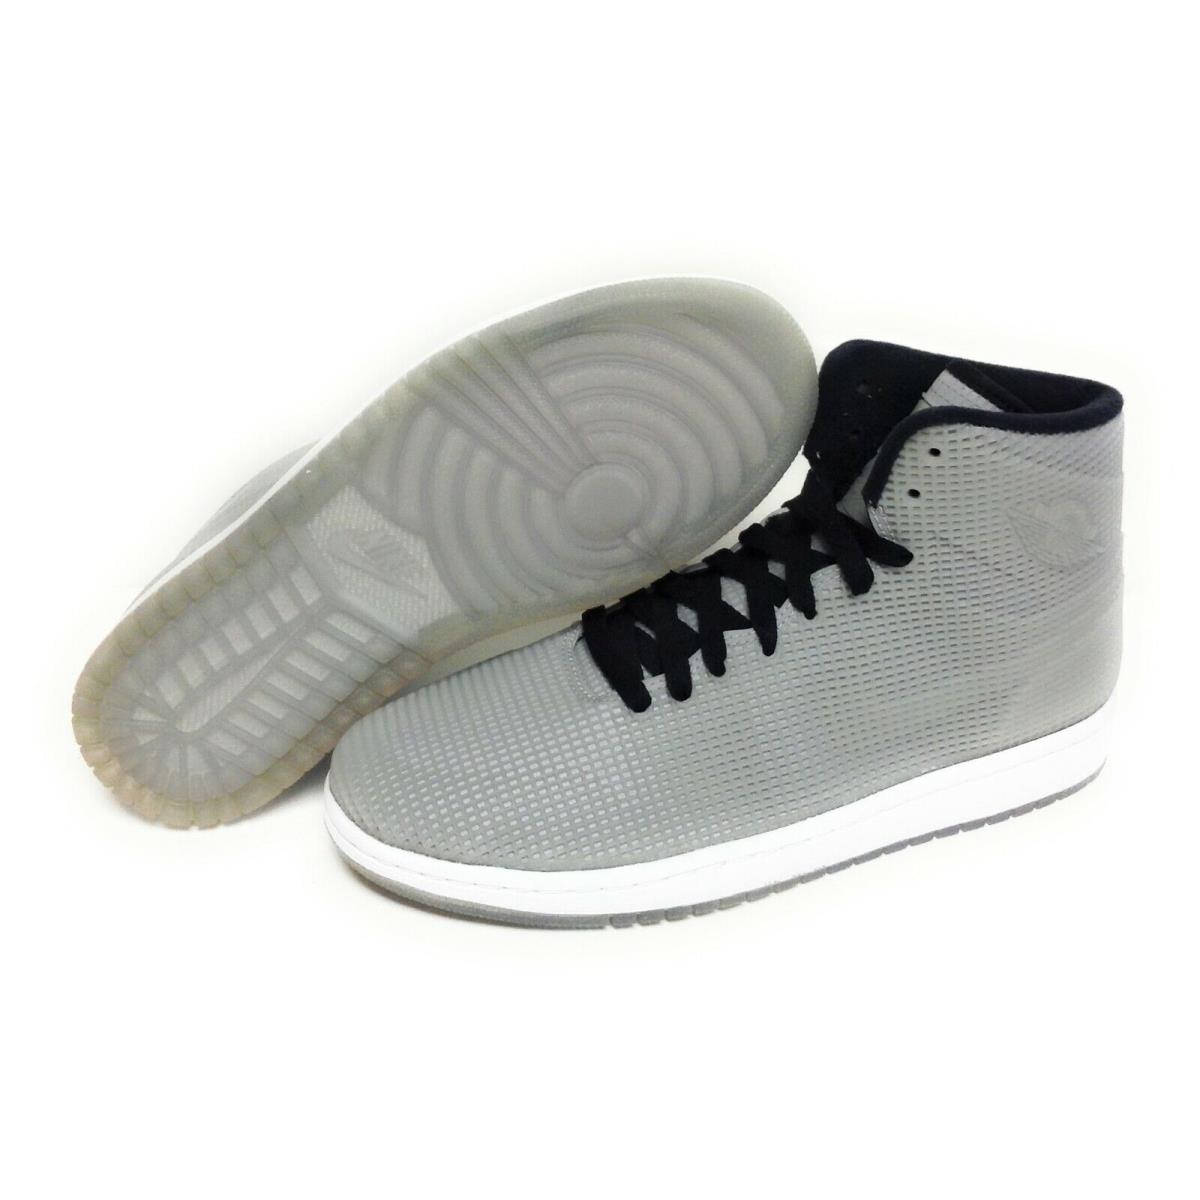 Mens Nike Air Jordan 4LAB1 677690 355 Glow In The Dark Silver Sneakers Shoes